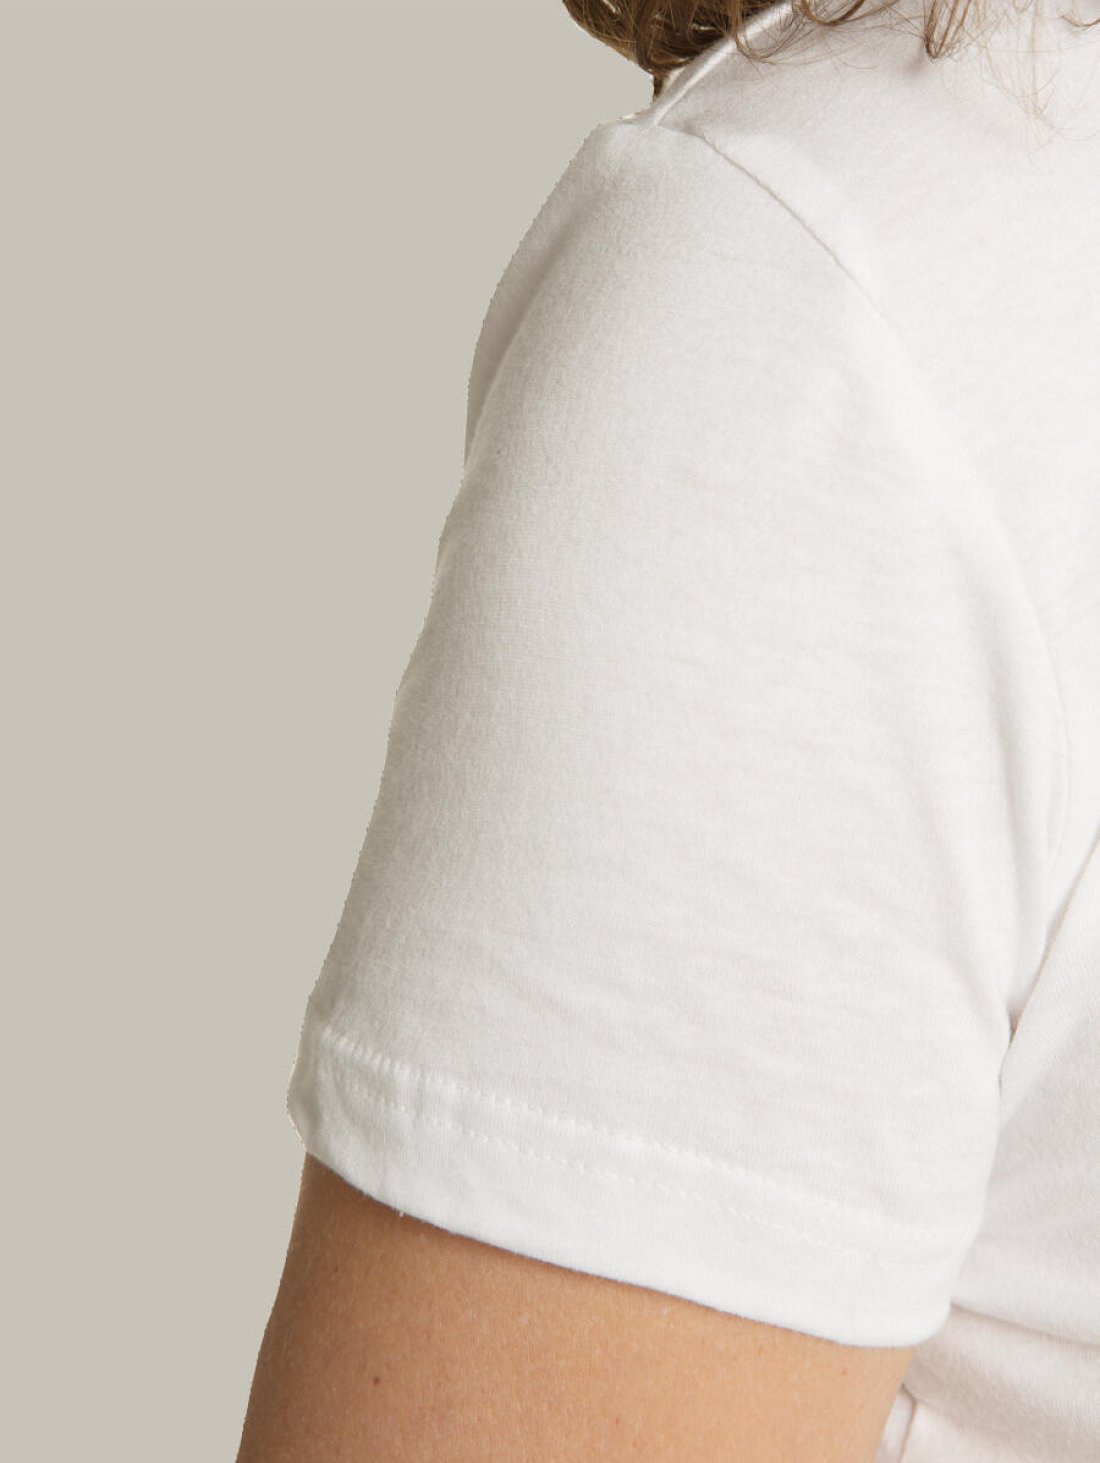 Жіноча футболка, біла з принтом аватара Hopper 059